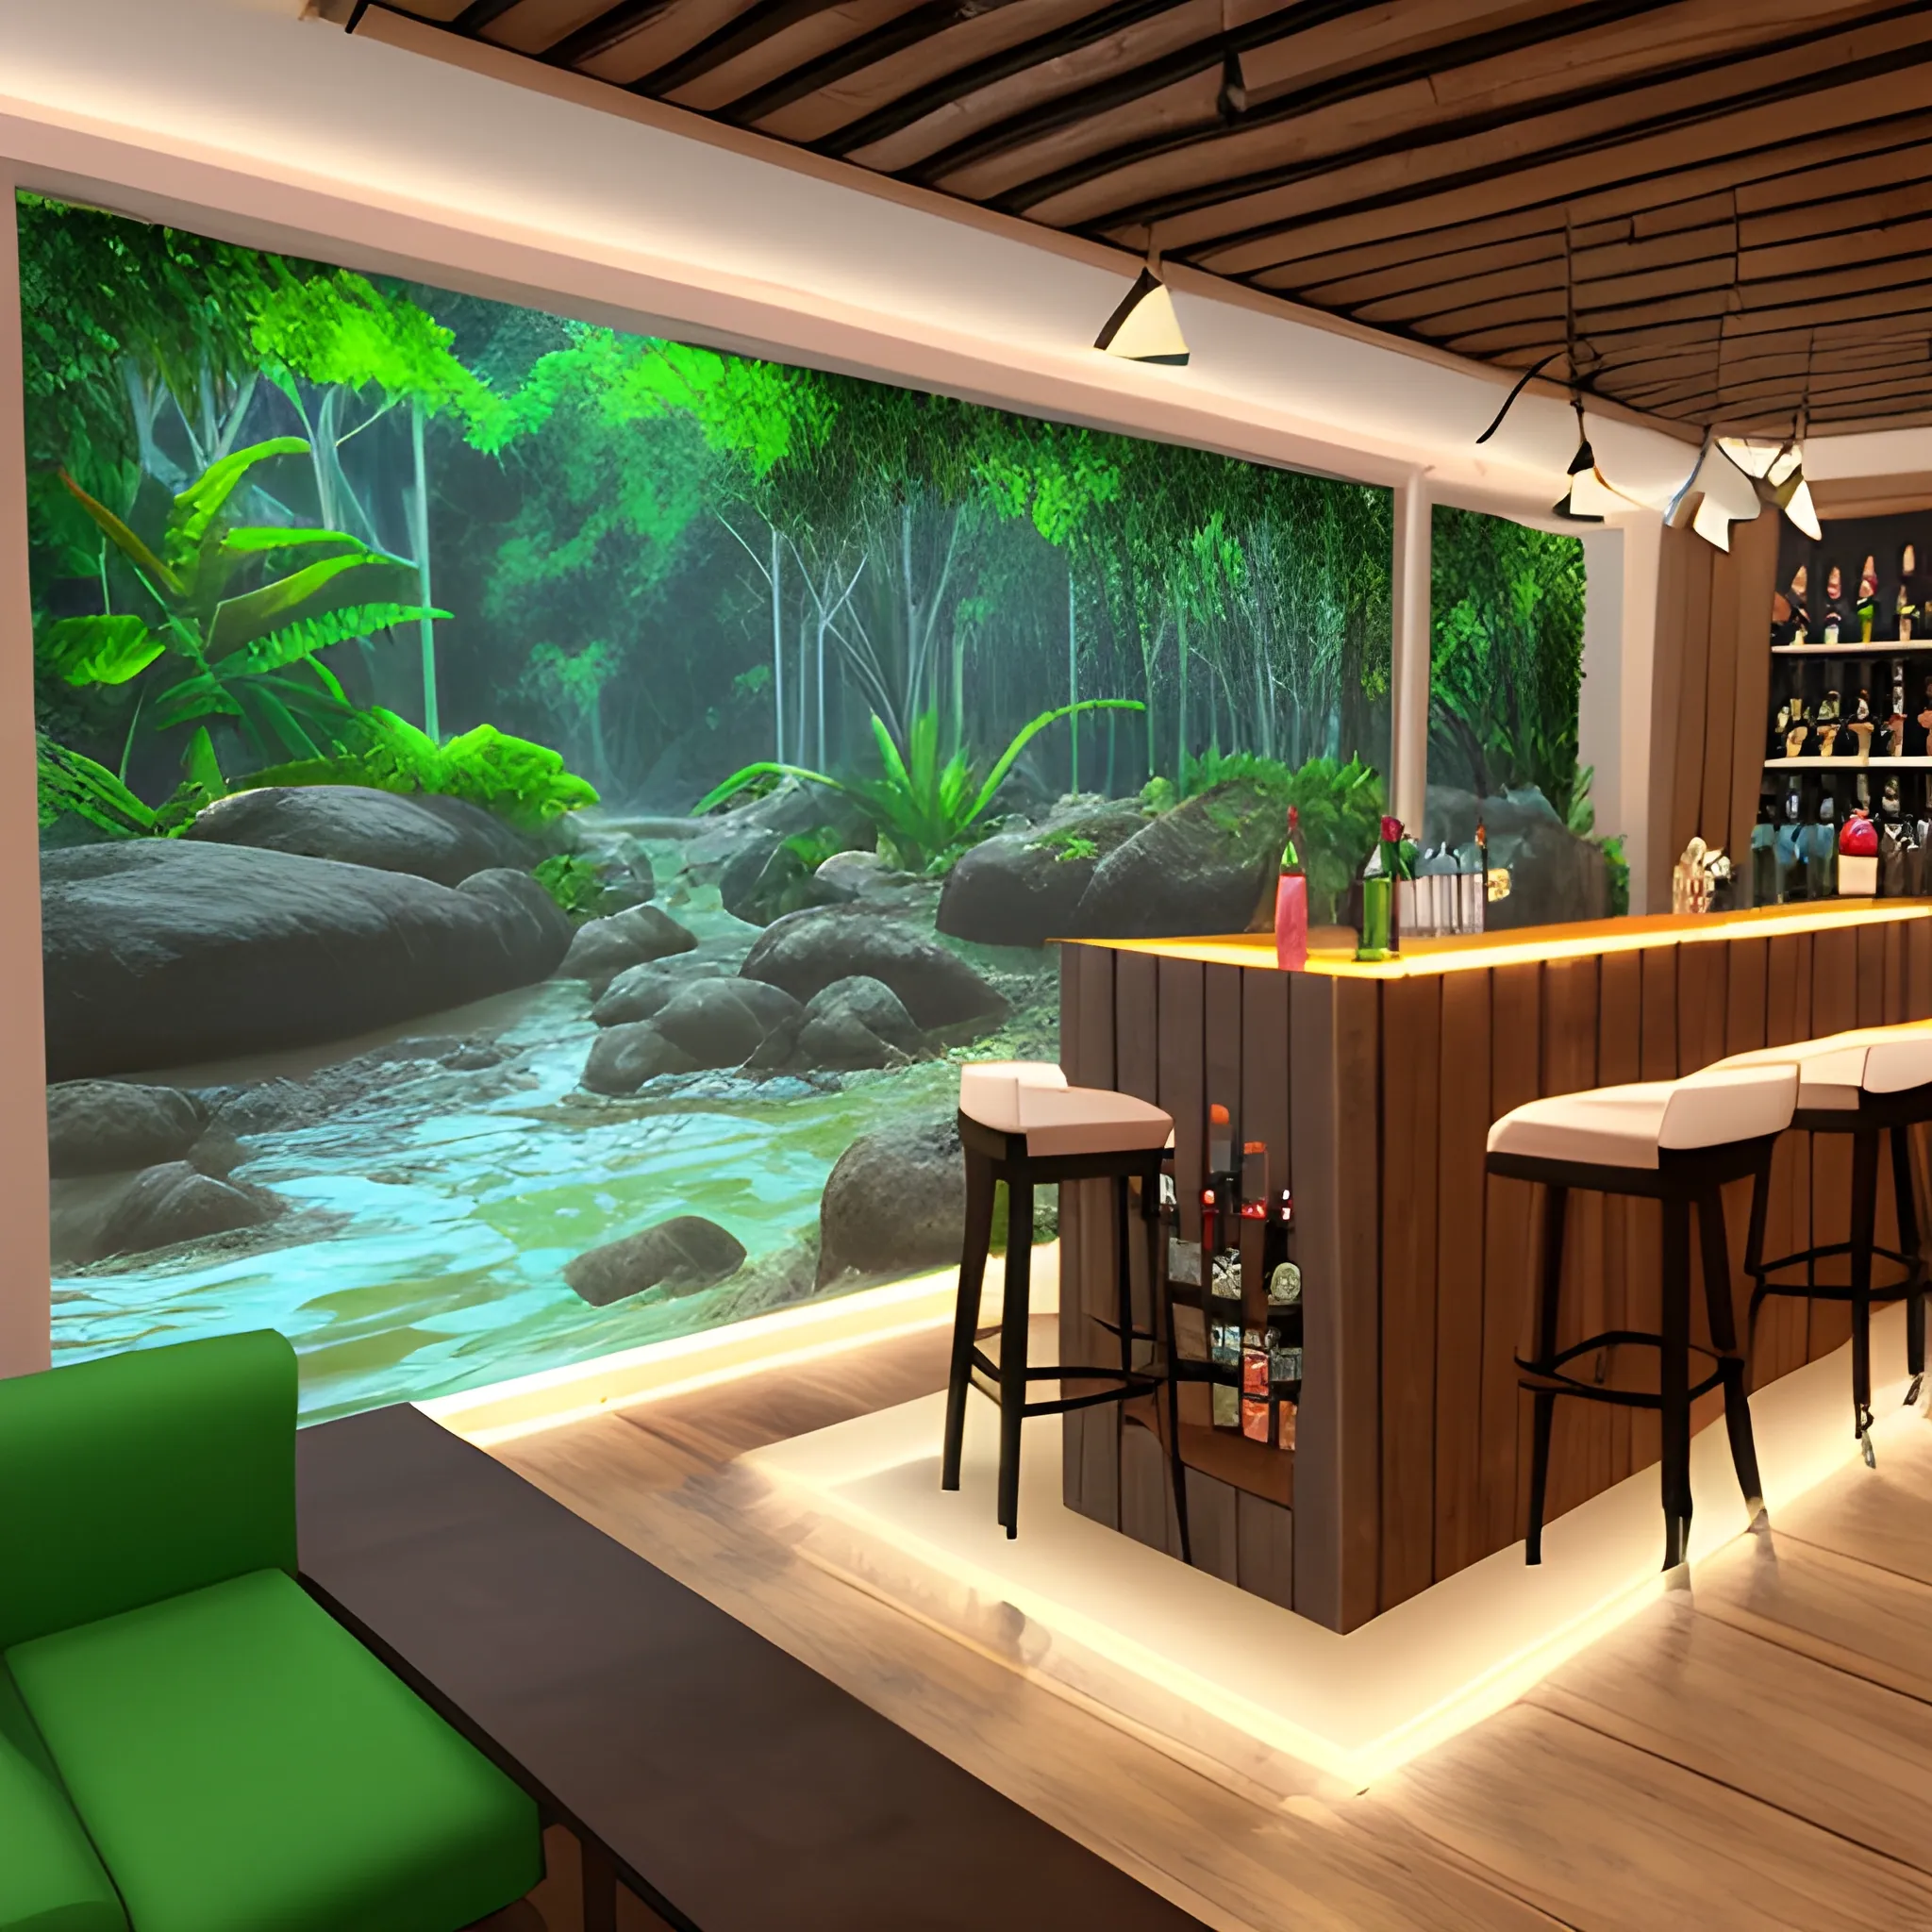 Bar & Lounge en la selva al costado de un rio, 3D